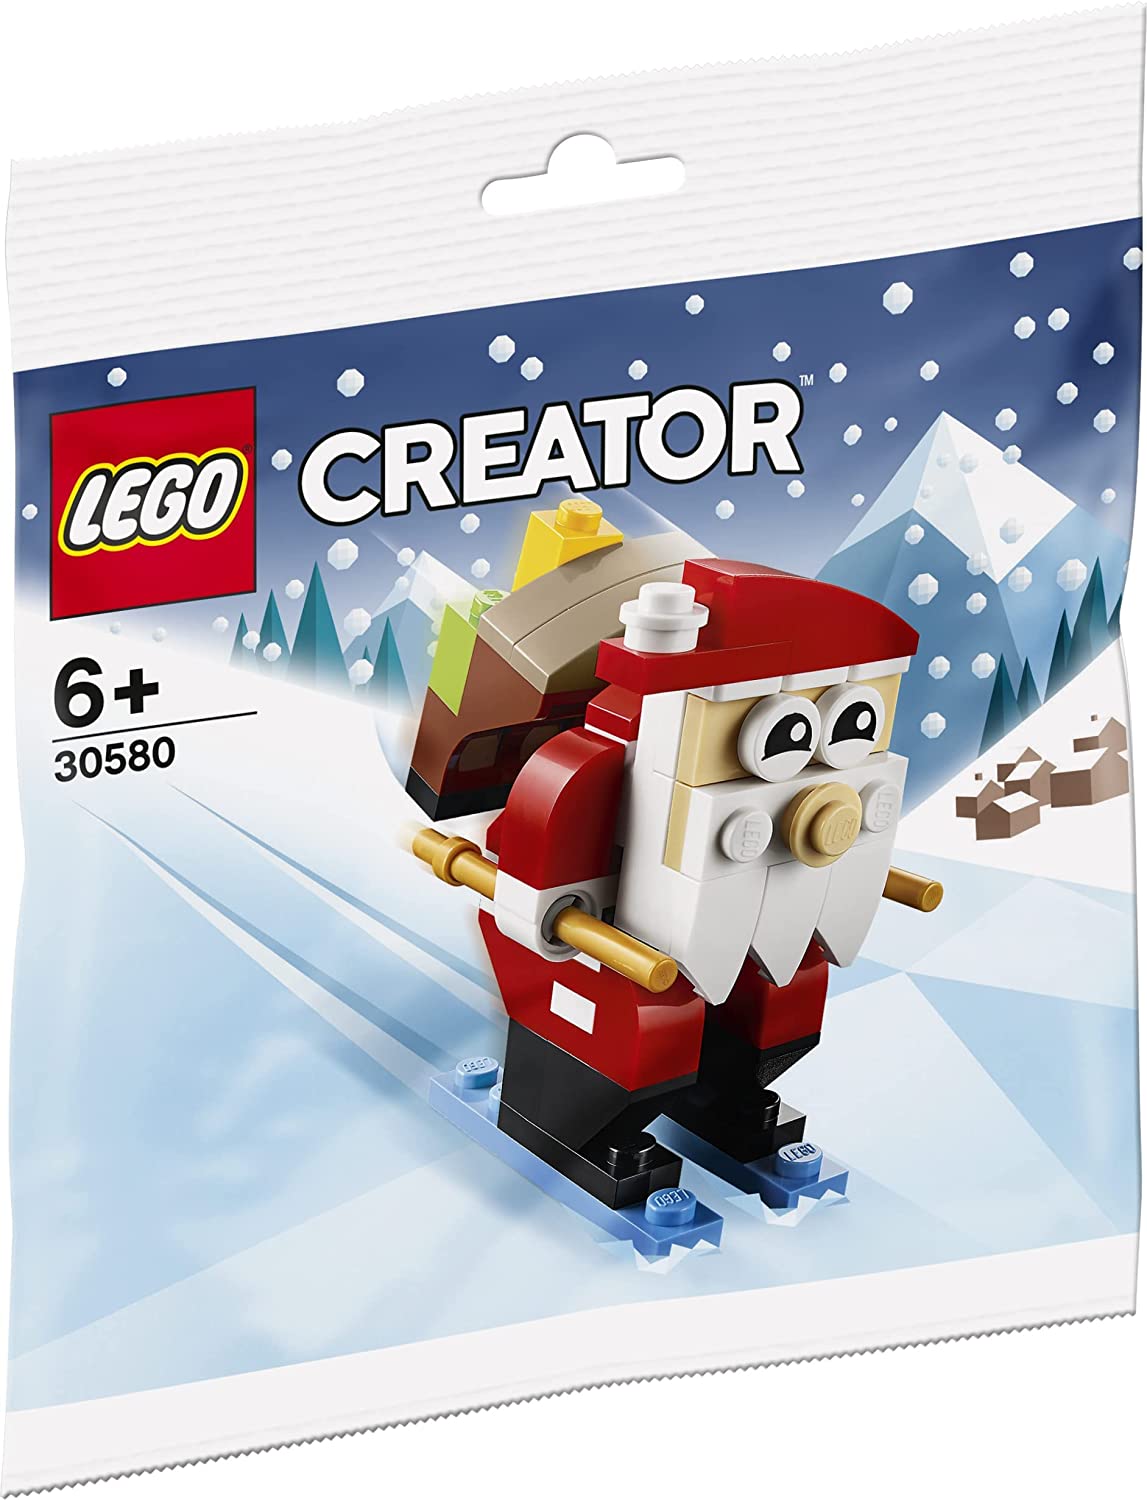 Bermad tobak Larry Belmont LEGO Creator Santa Claus Polybag Set (30580) – The Brick Show Shop